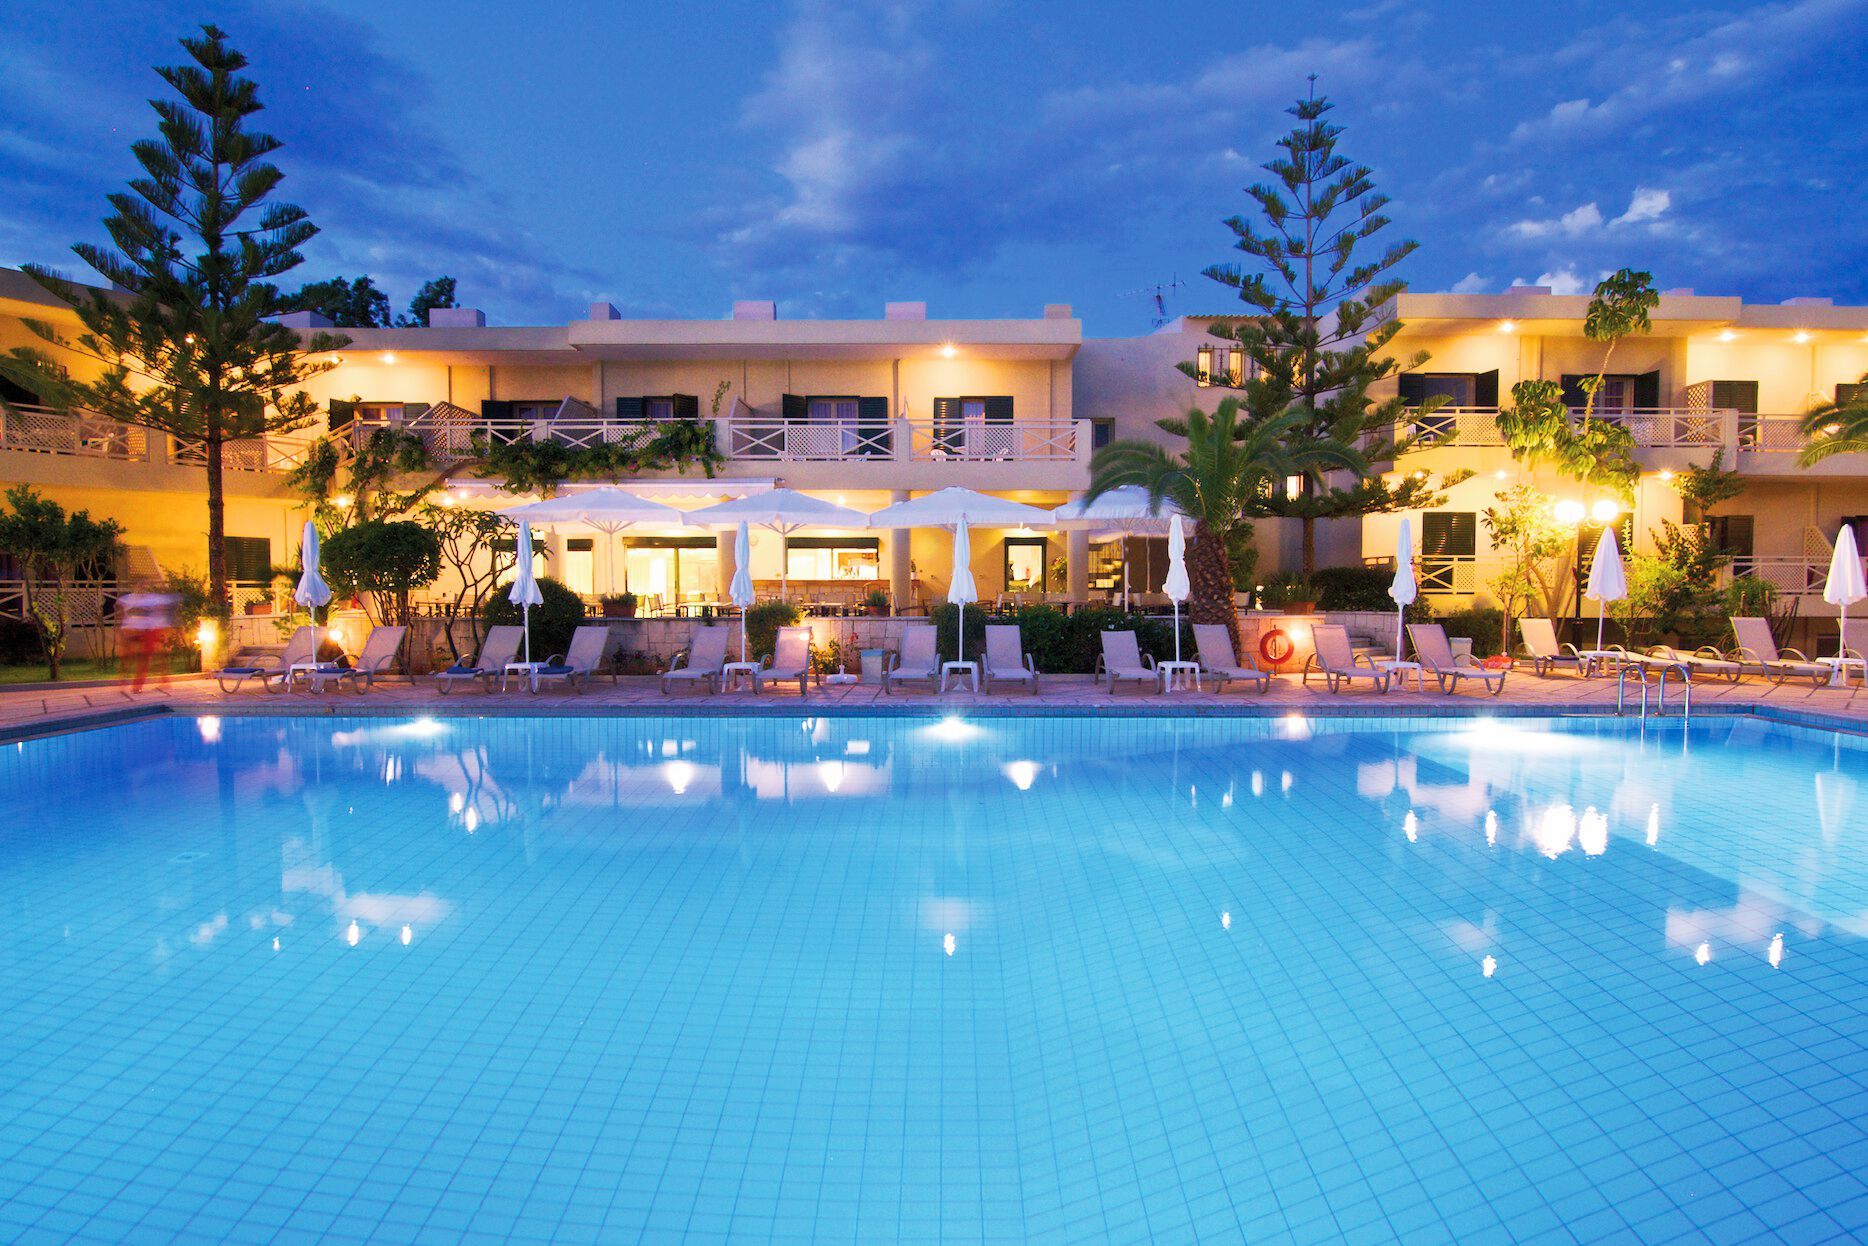 Crète - Malia - Grèce - Iles grecques - Hotel Solimar Ruby 4*